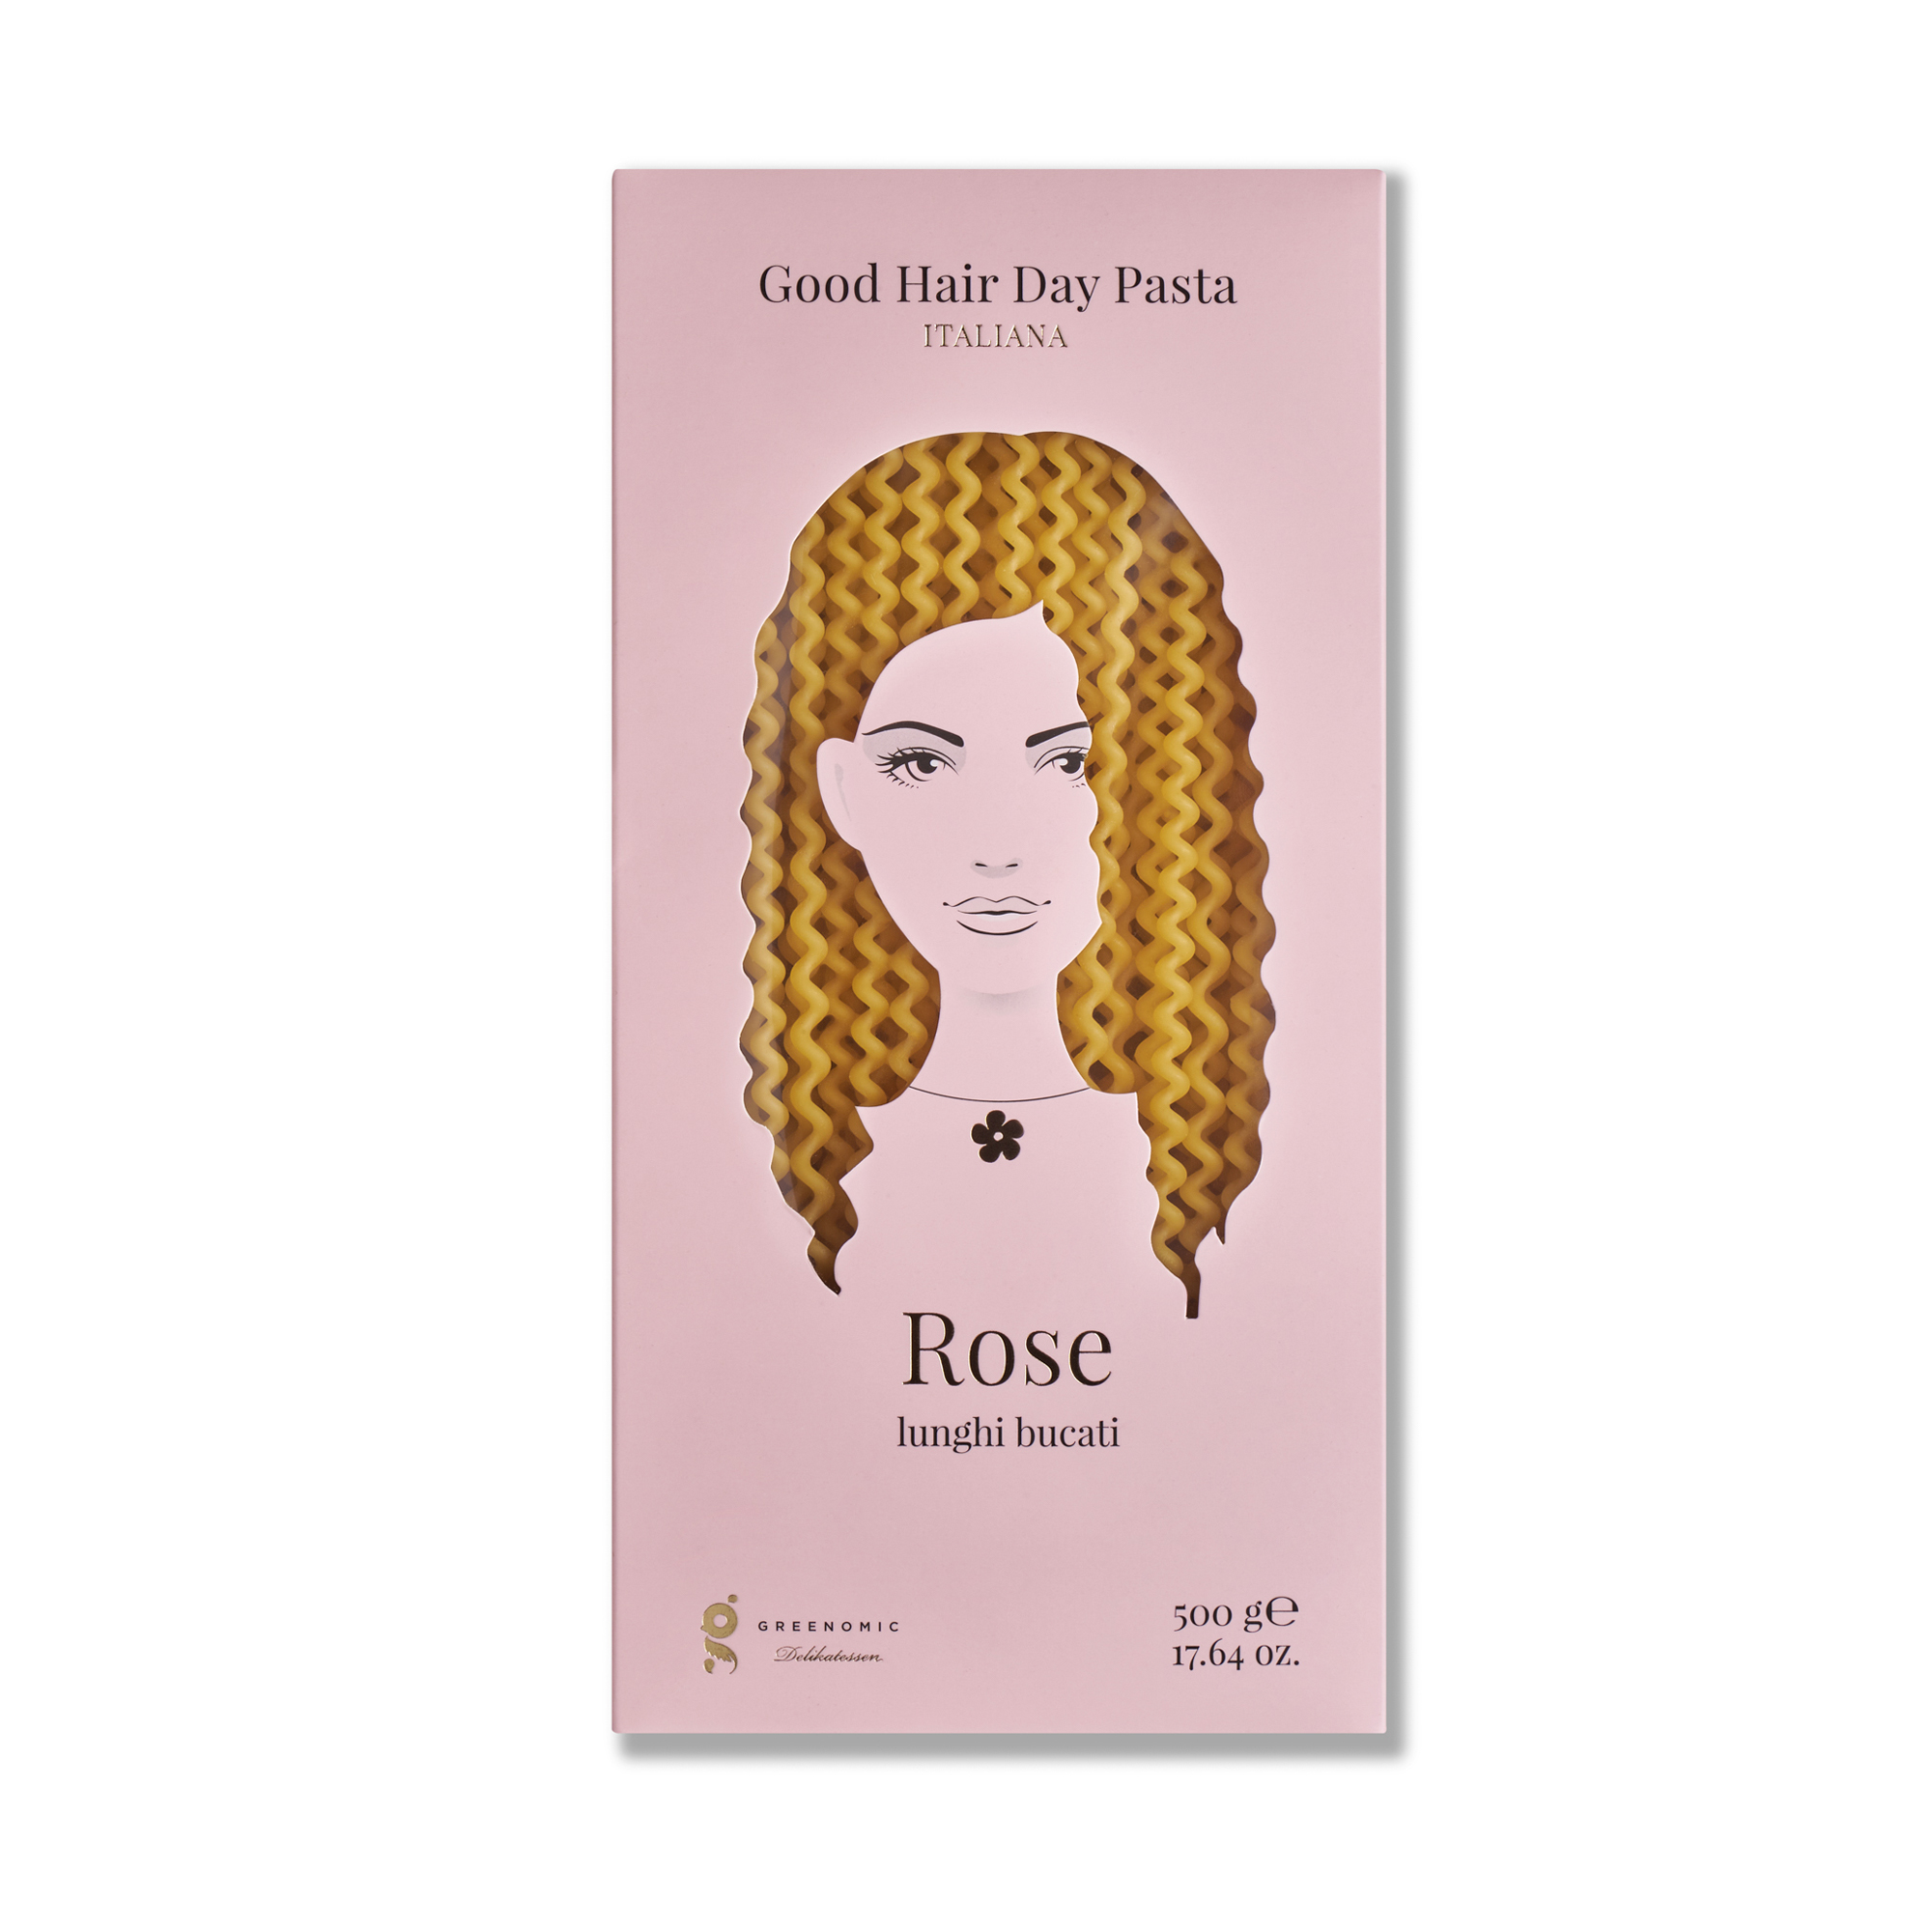 Greenomic Good Hair Day Pasta - Rose lunghi bucati